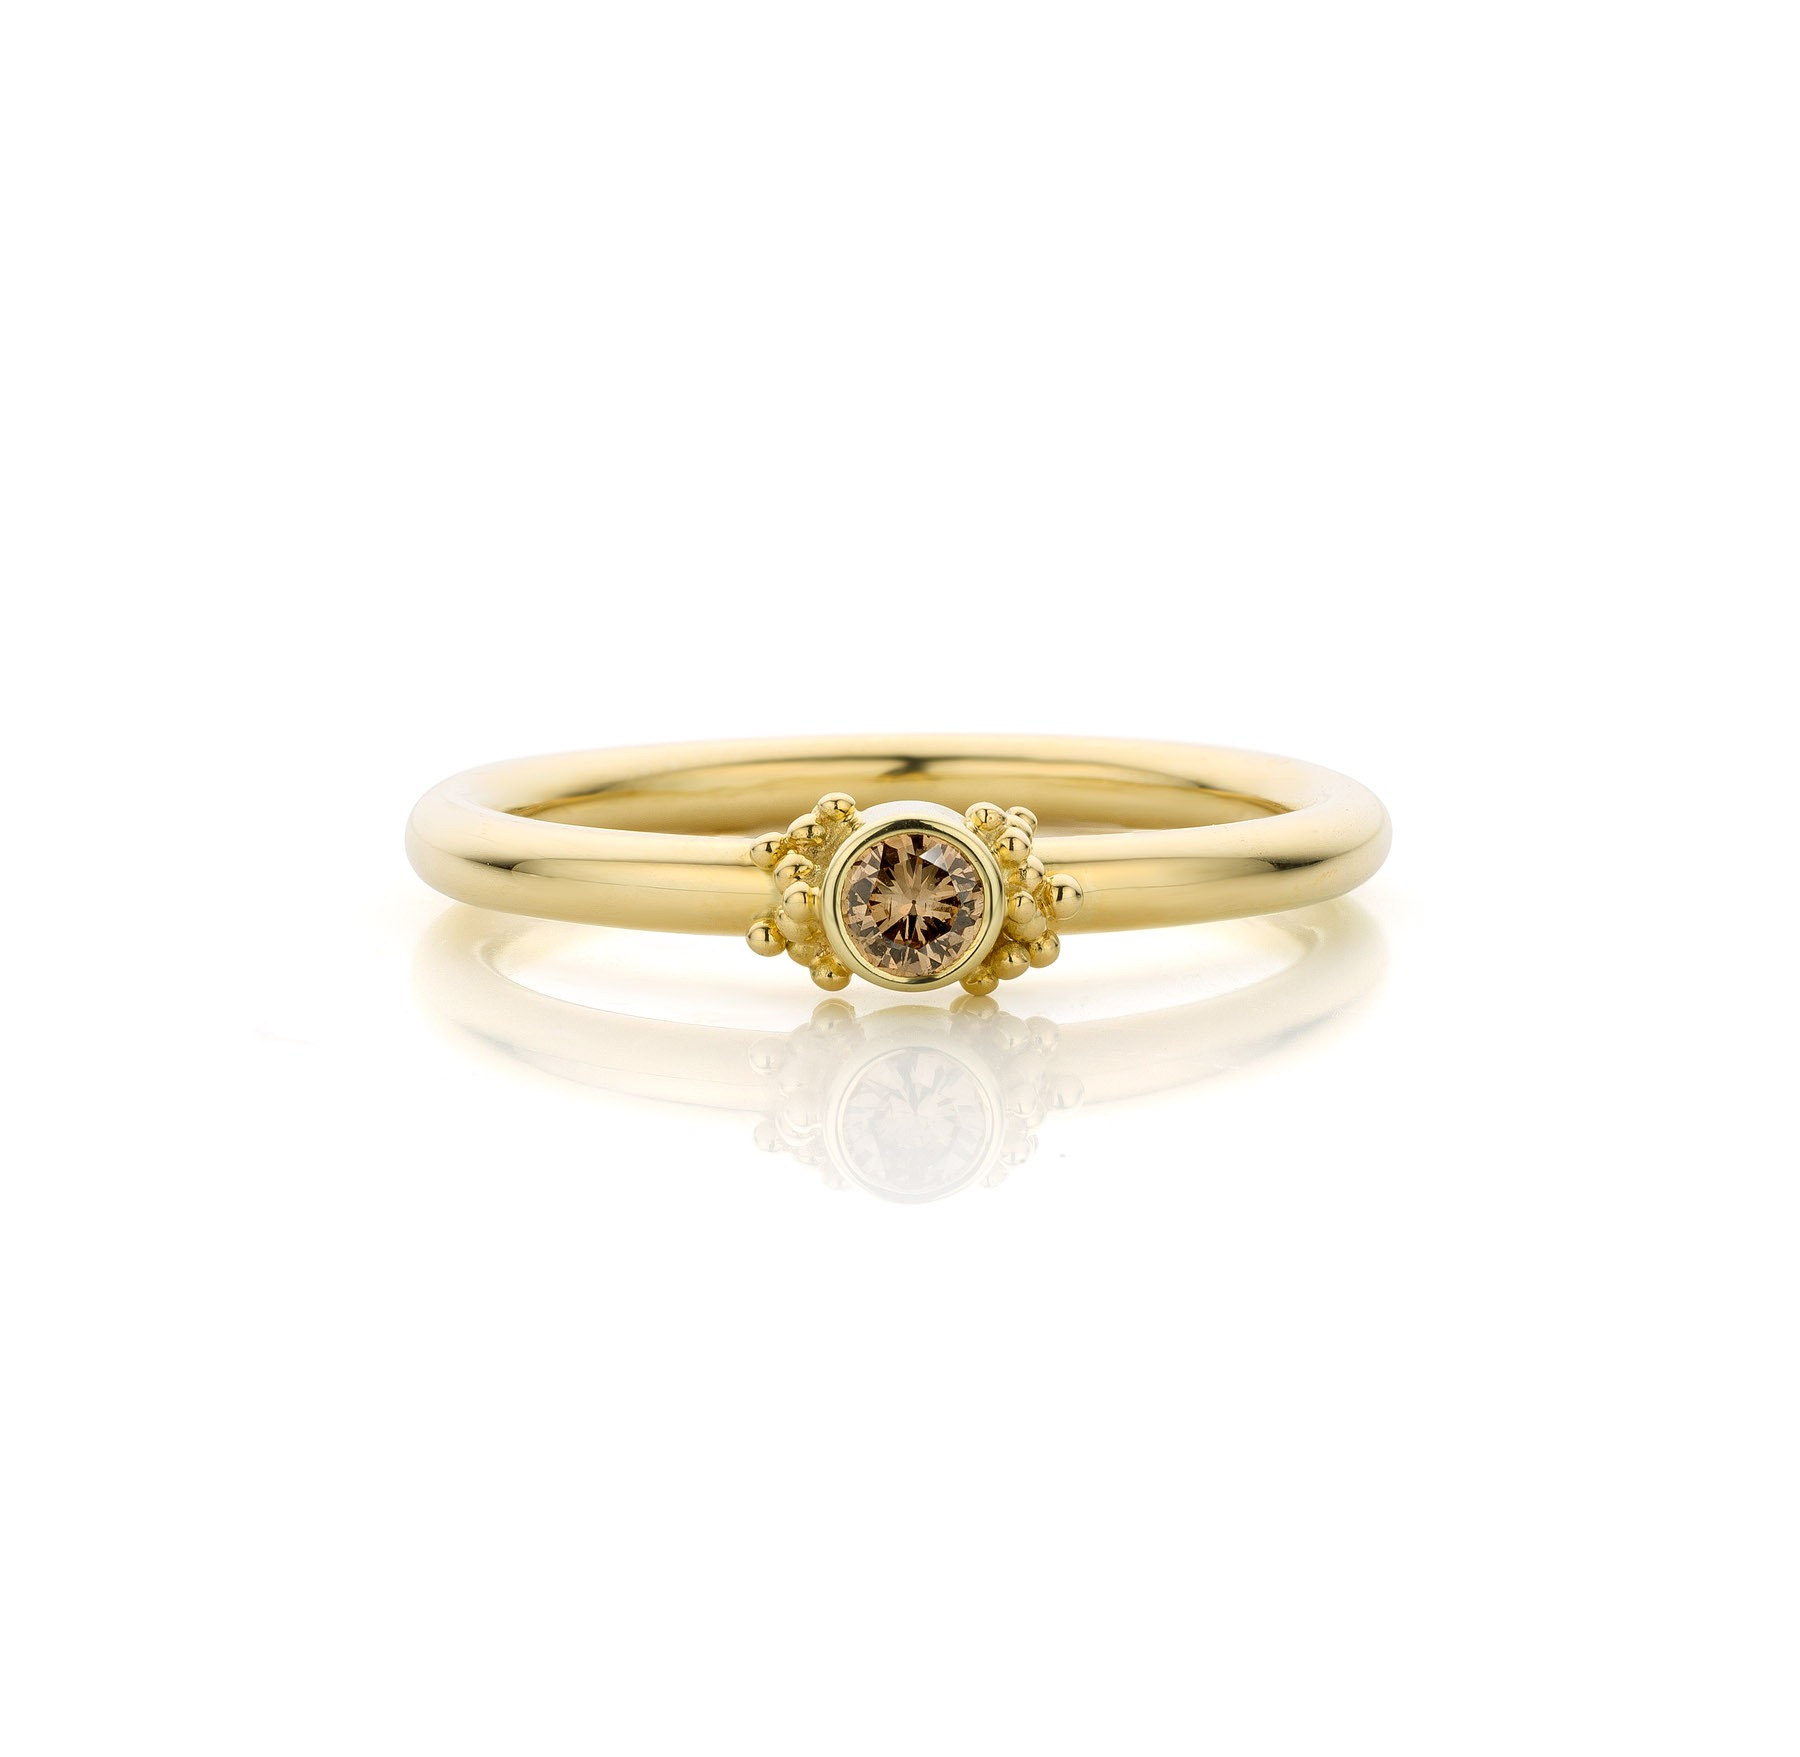 Afvoer Omhoog Perforatie 14kt gouden ring met bruine diamant | Sarah Kobak Edelsmid